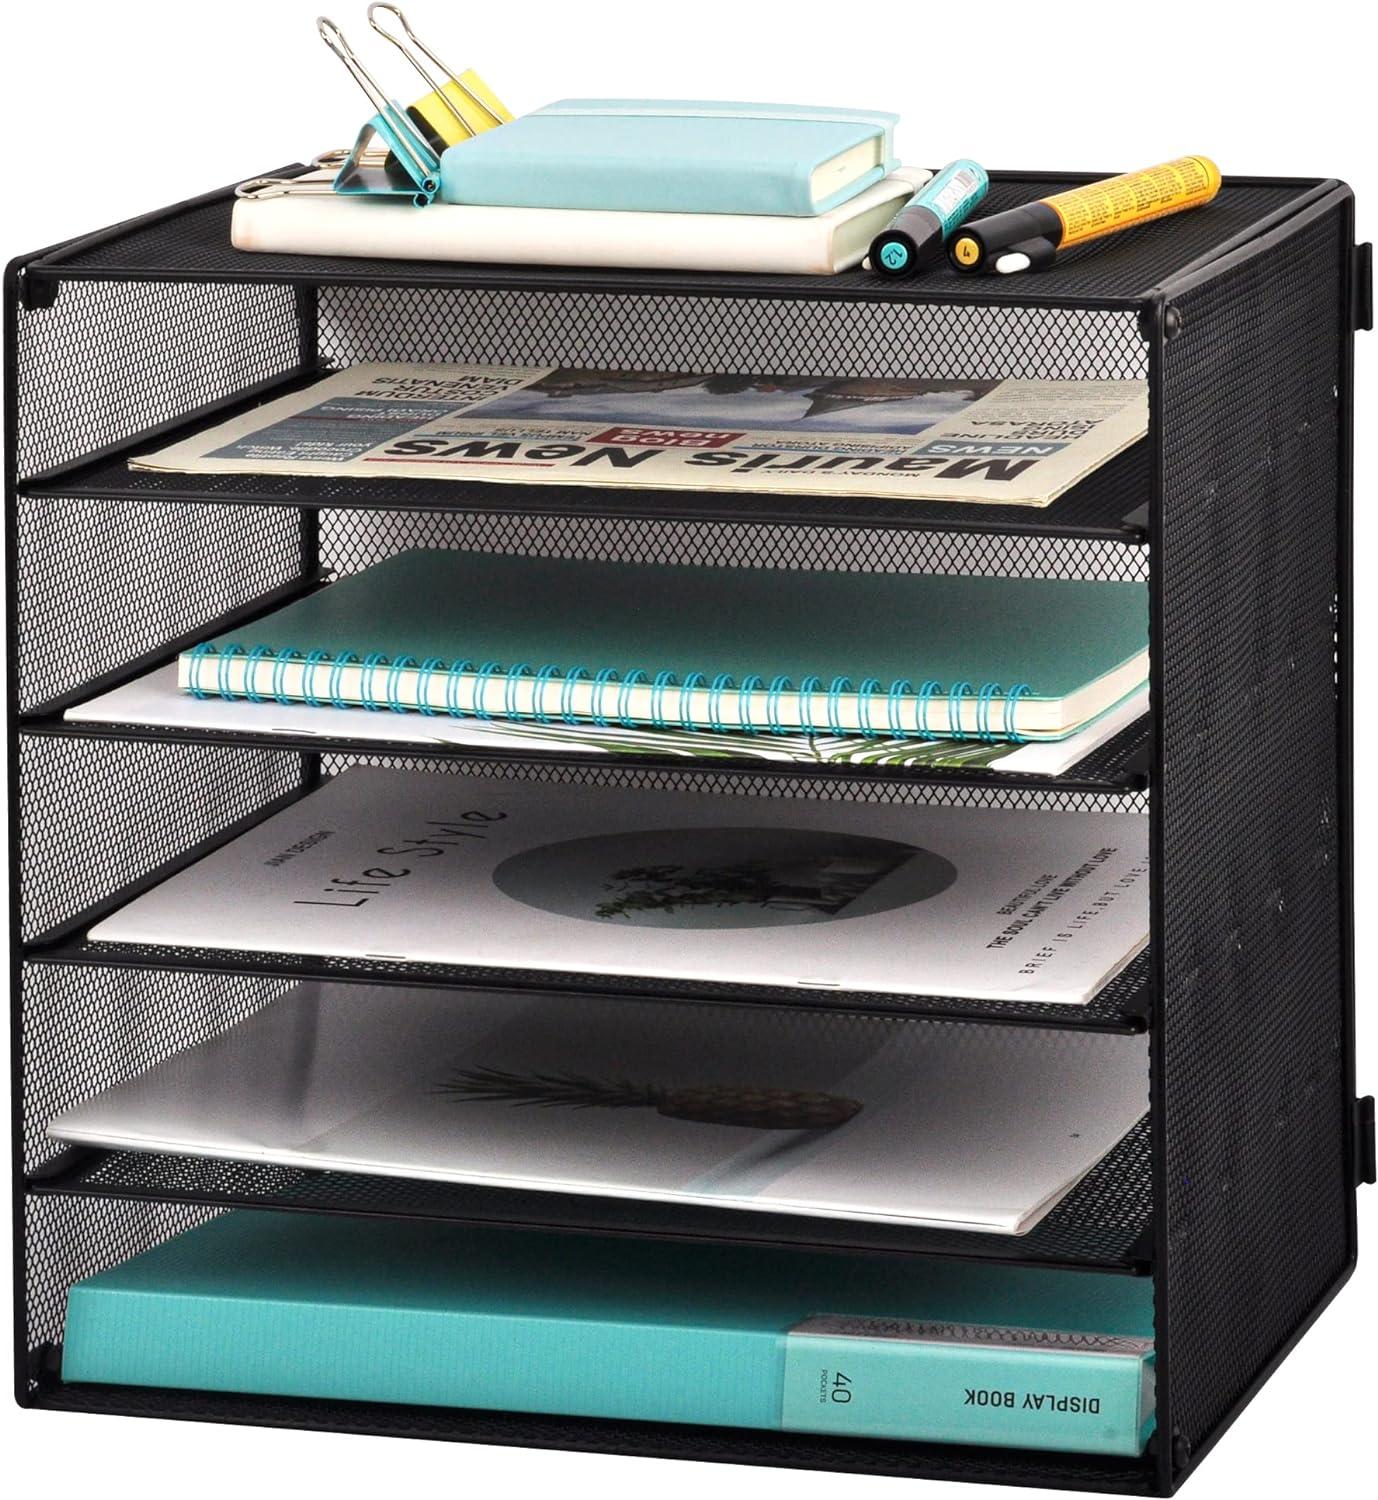 easepres 5 slot desk organizer tray mesh file paper letter tray desktop paper sorter literature organizer